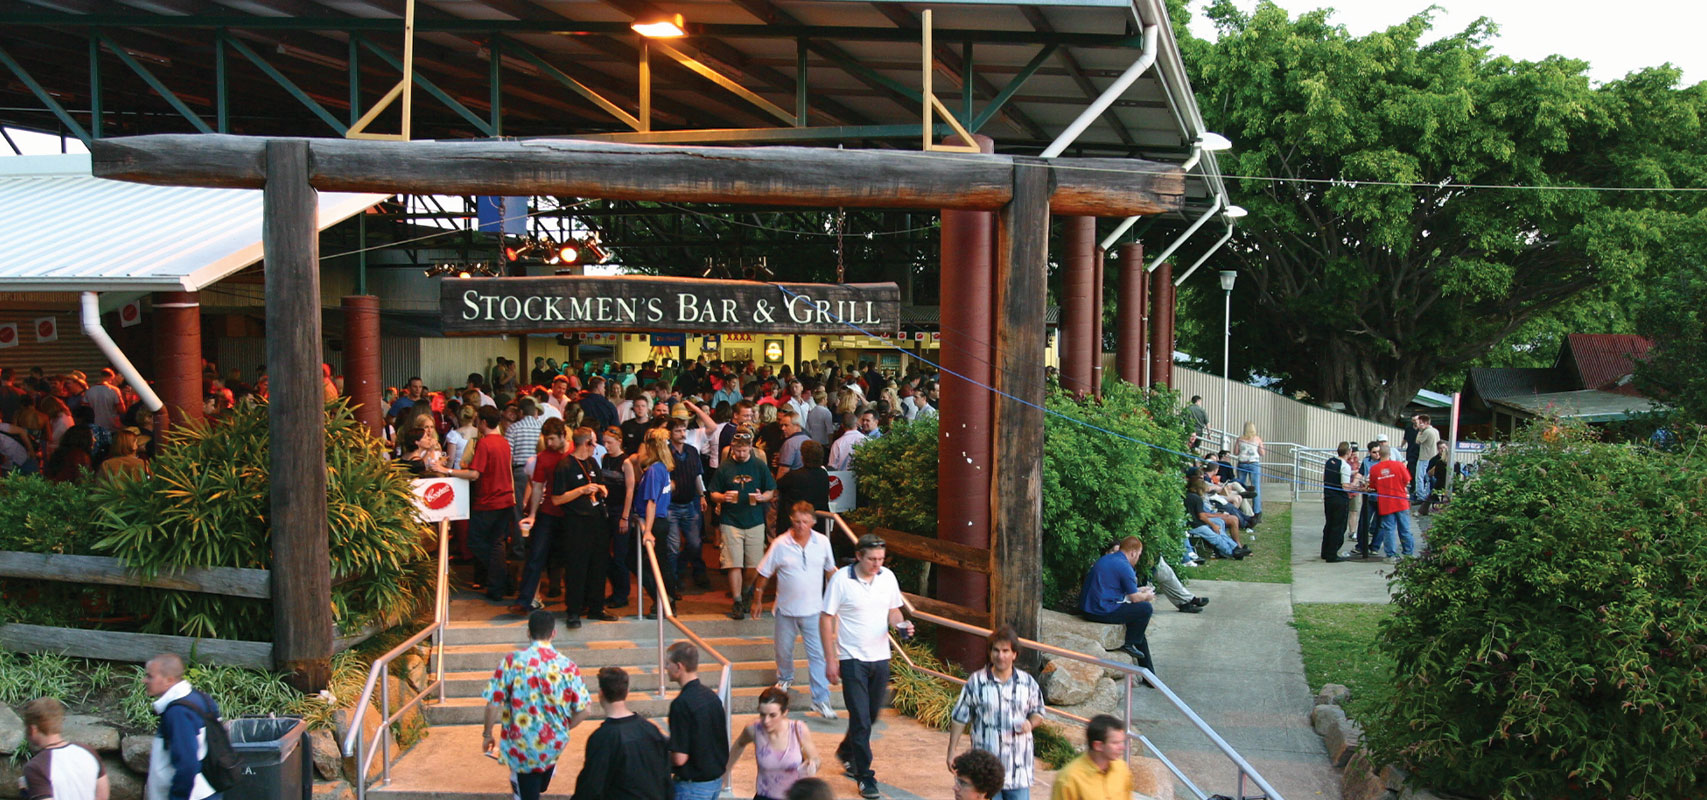 Stockmen's Bar & Grill